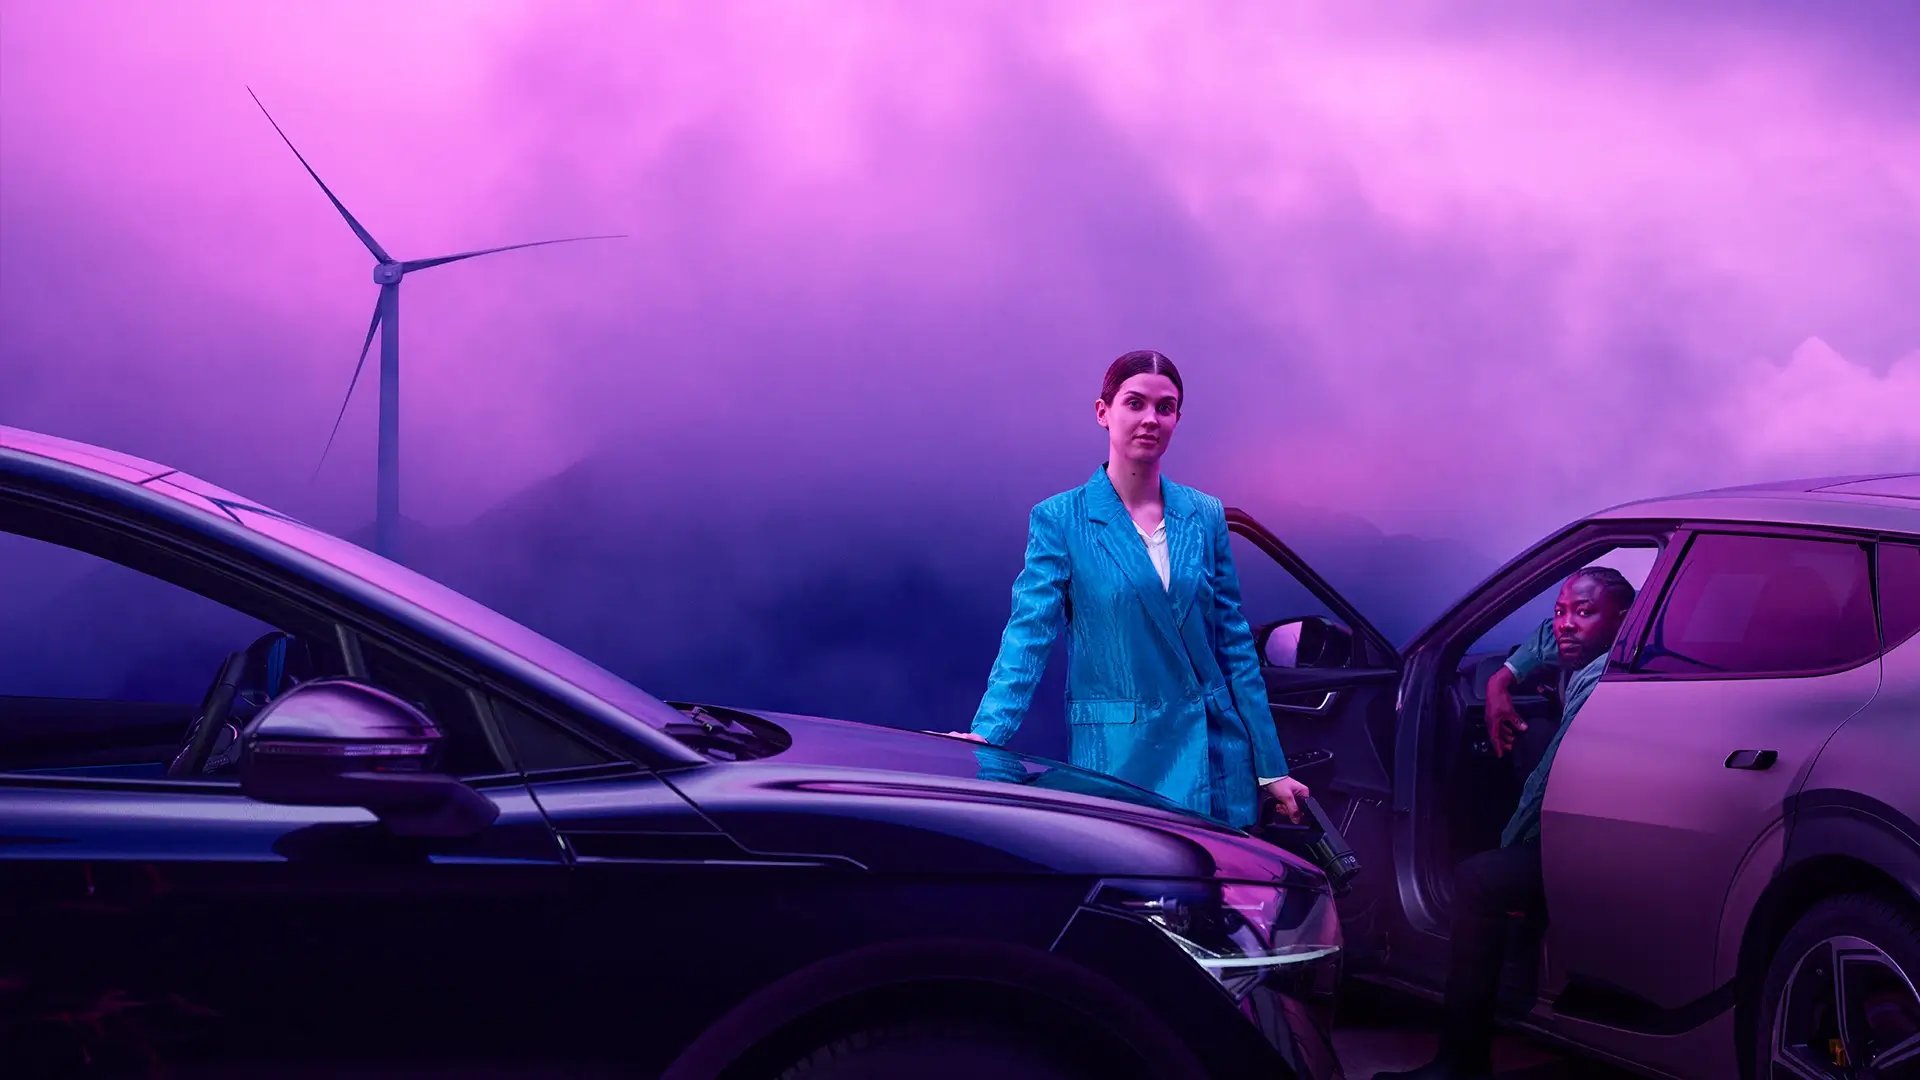 Woman and man charging EV wind turbine purple background